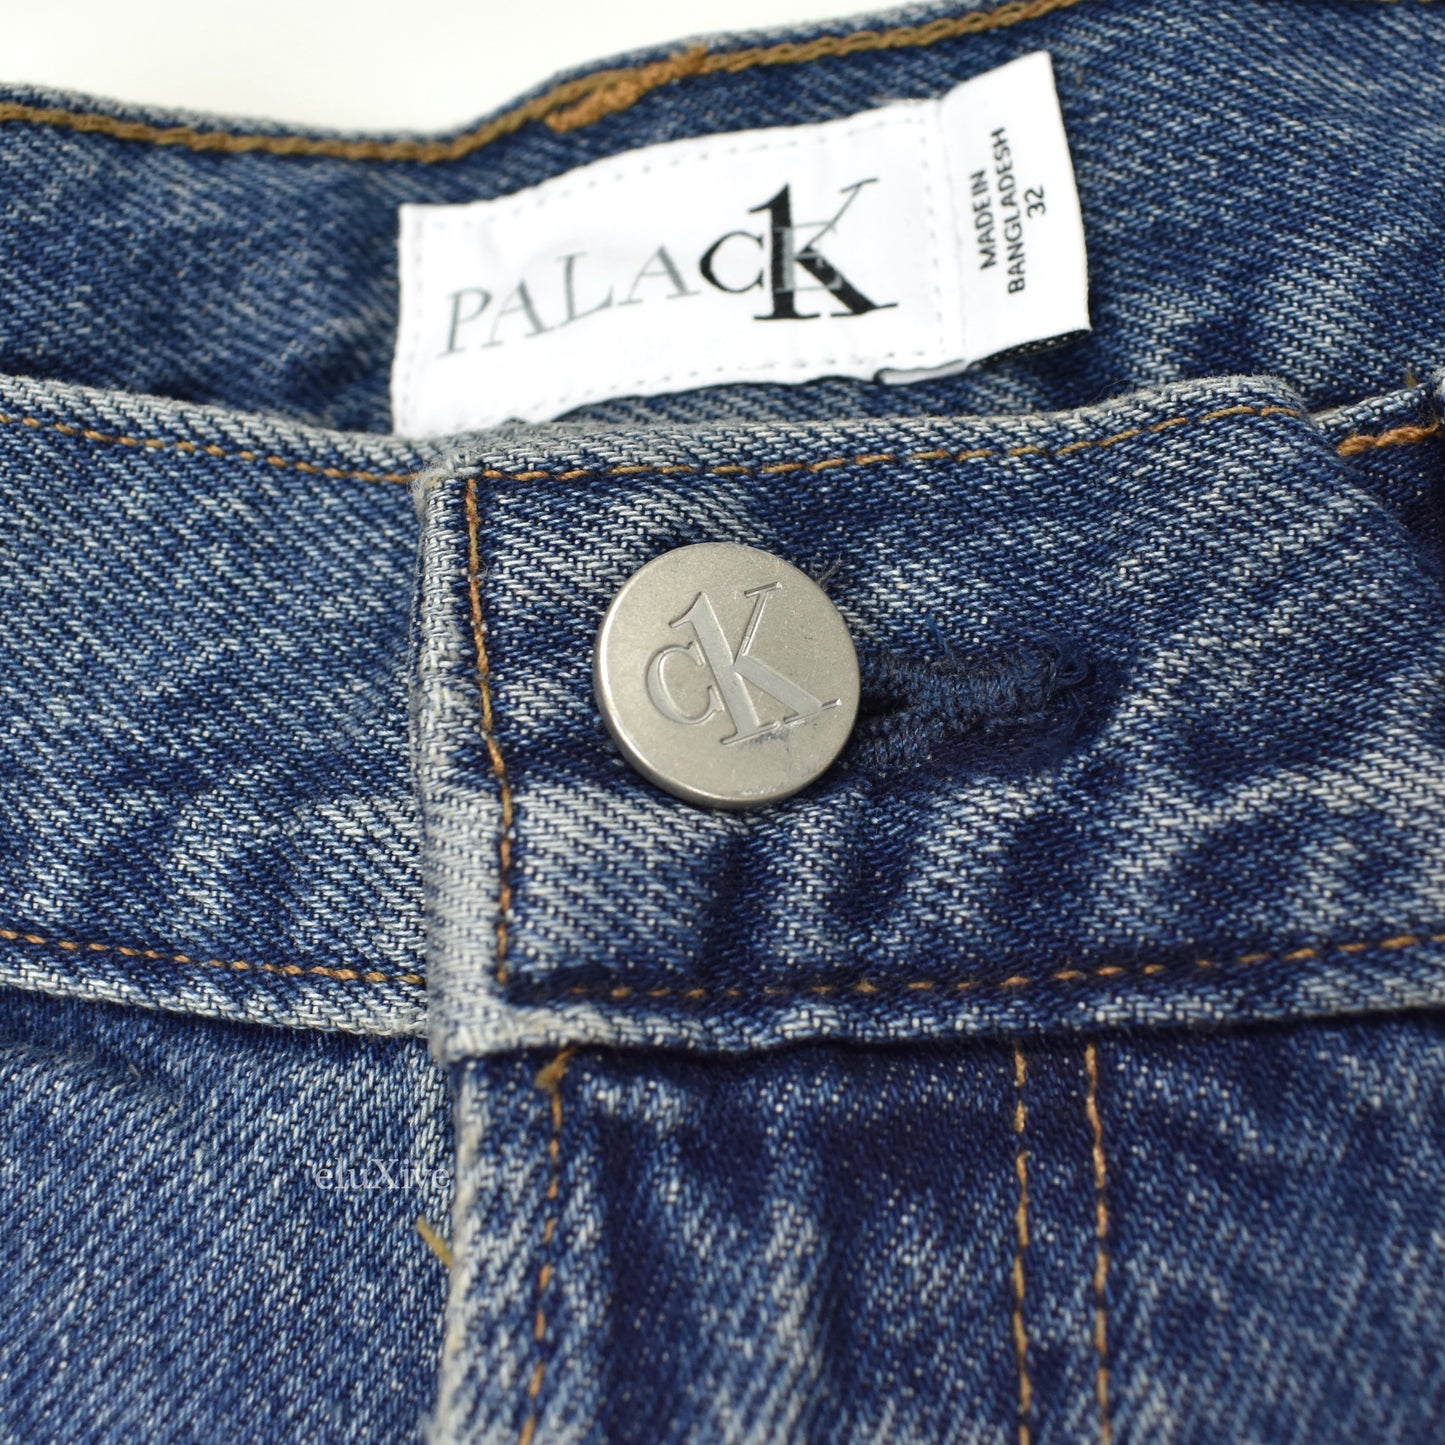 Palace x Calvin Klein - CK1 Baggy Denim Shorts (Blue)